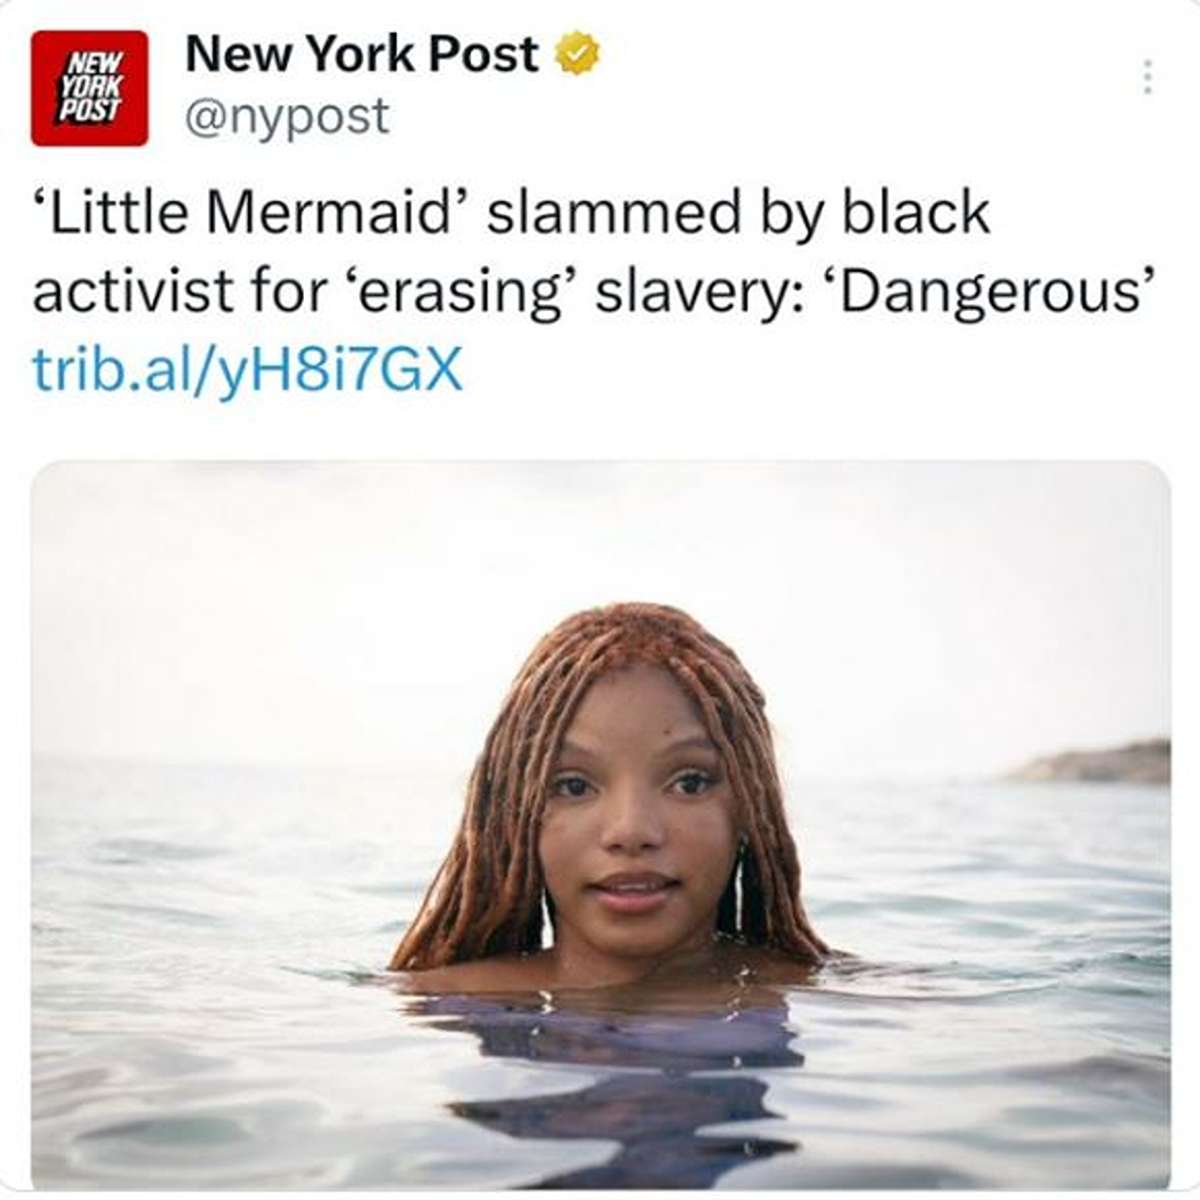 delusional people - ariel halle bailey - New York Post Post New York 'Little Mermaid' slammed by black activist for 'erasing' slavery 'Dangerous trib.alyH8i7GX